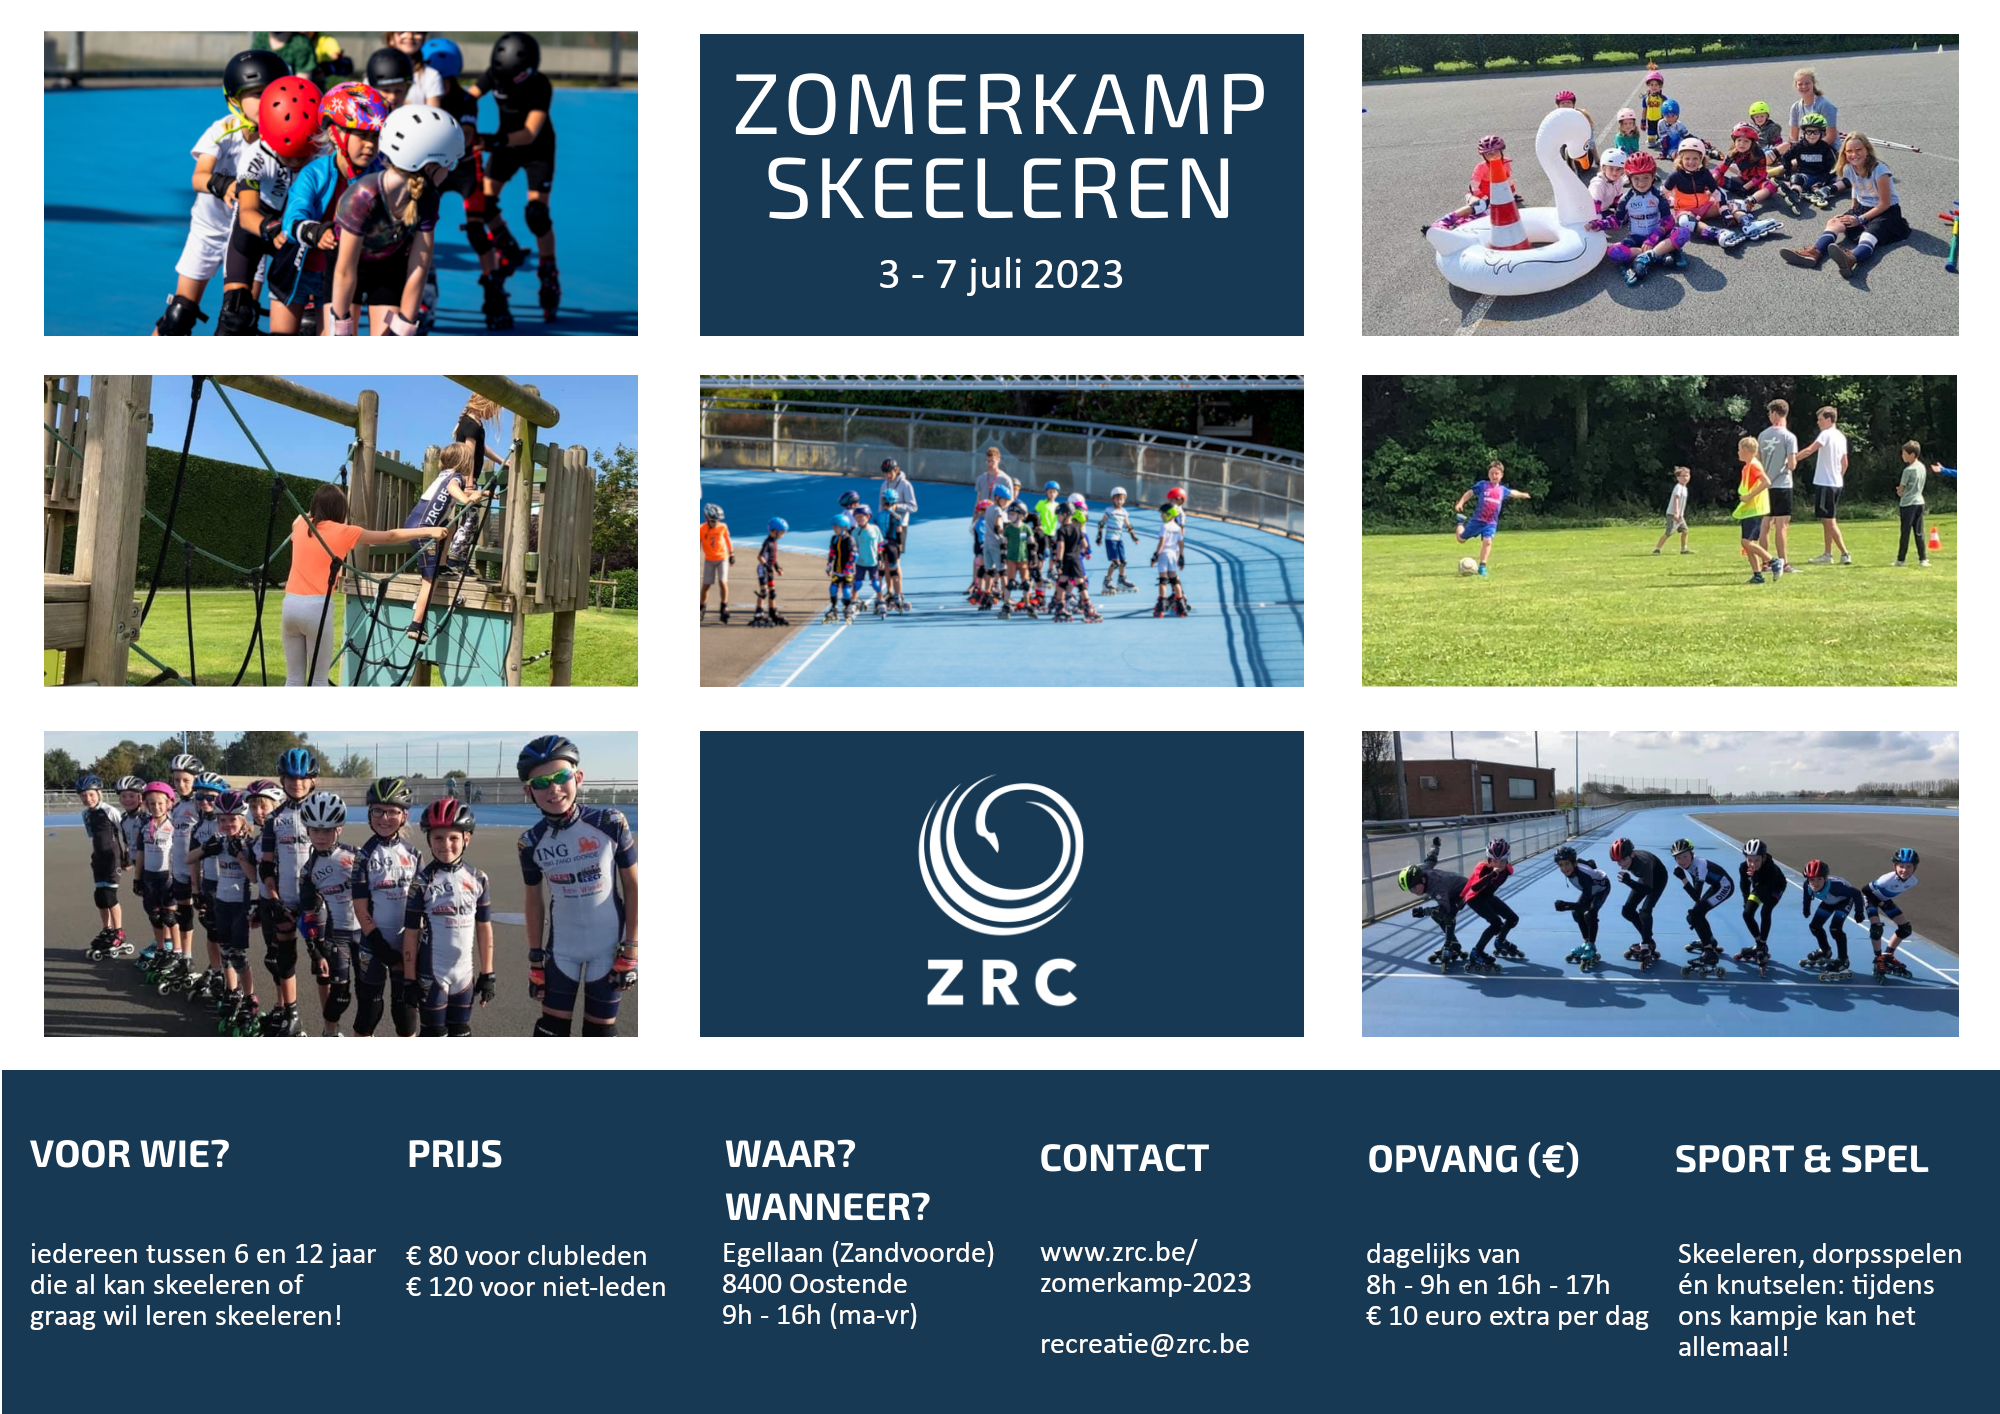 https://www.zrc.be/wp-content/uploads/2023/02/zomerkamp-Skeeleren-2023.png